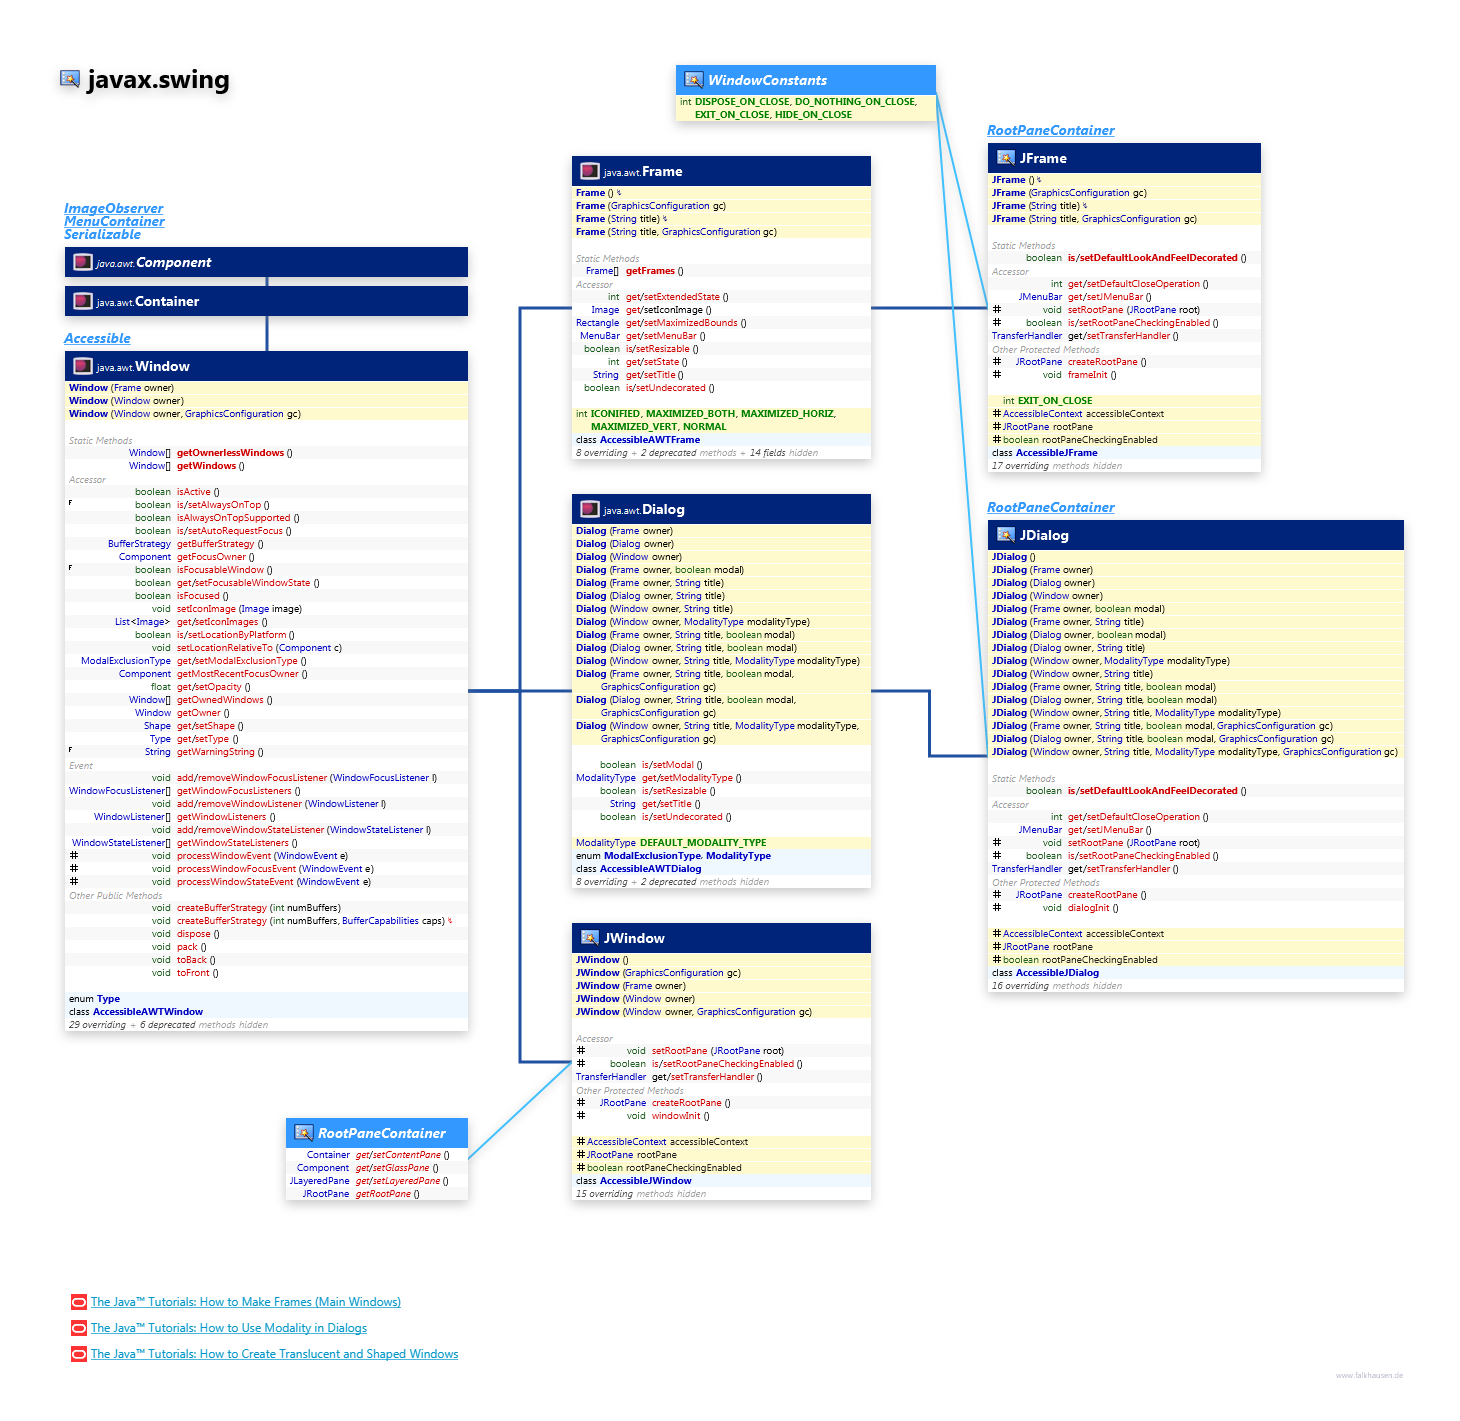 javax.swing JFrame class diagram and api documentation for Java 8